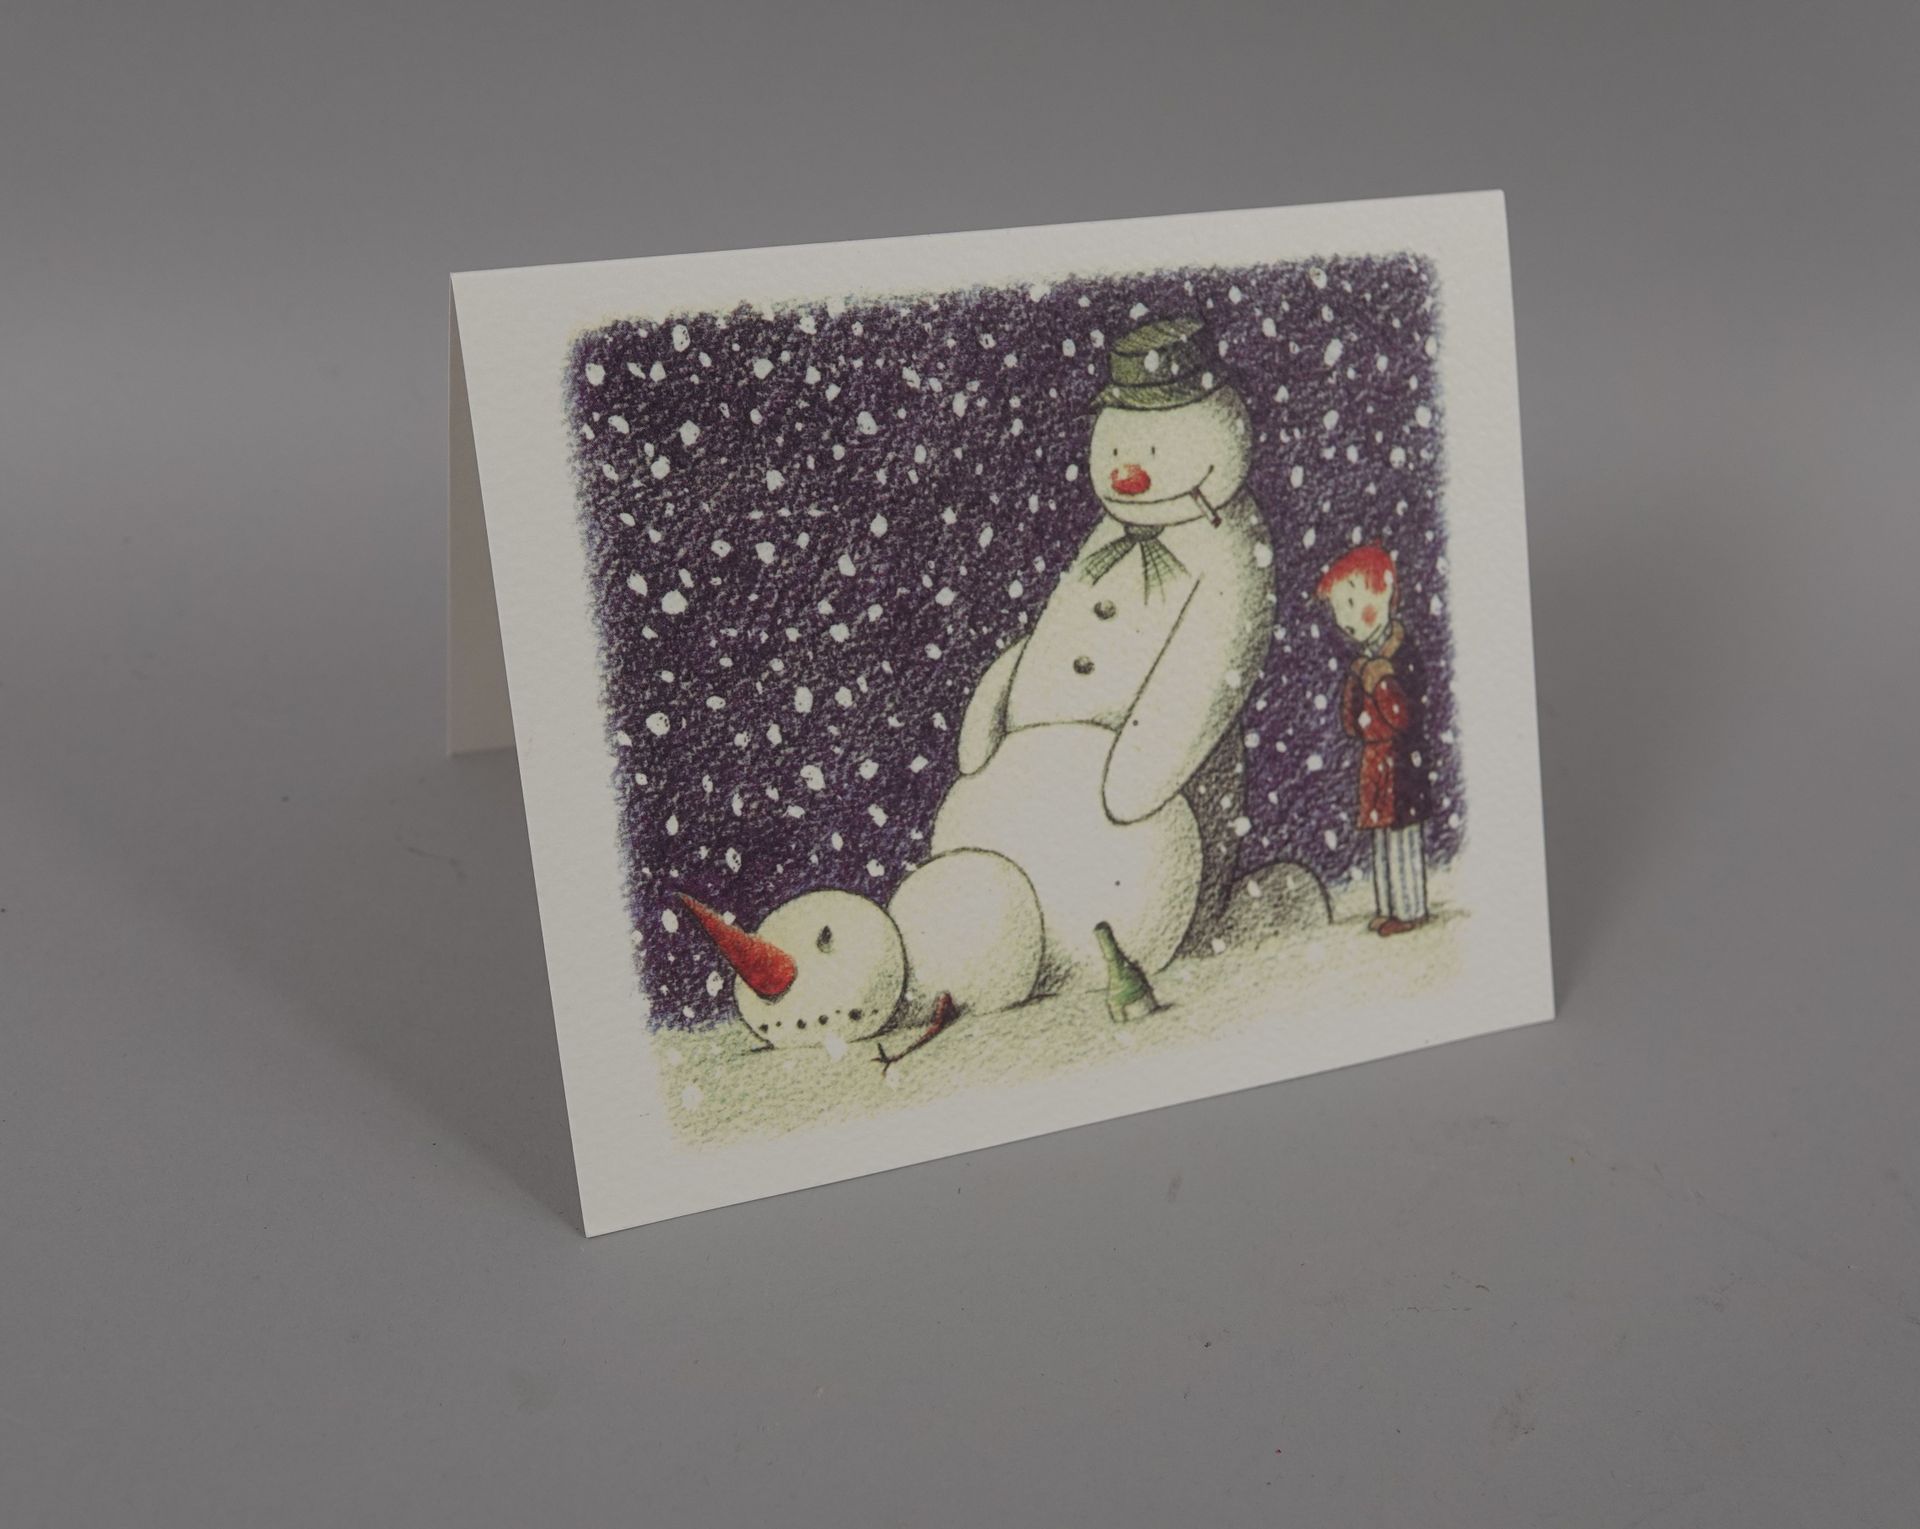 Null 班克斯，之后
粗鲁的雪人, 2005
打印在纸上，明信片背面有签名。为2005年 "圣诞老人的贫民窟 "展览制作。
限量版，没有编号
展开后29 x &hellip;